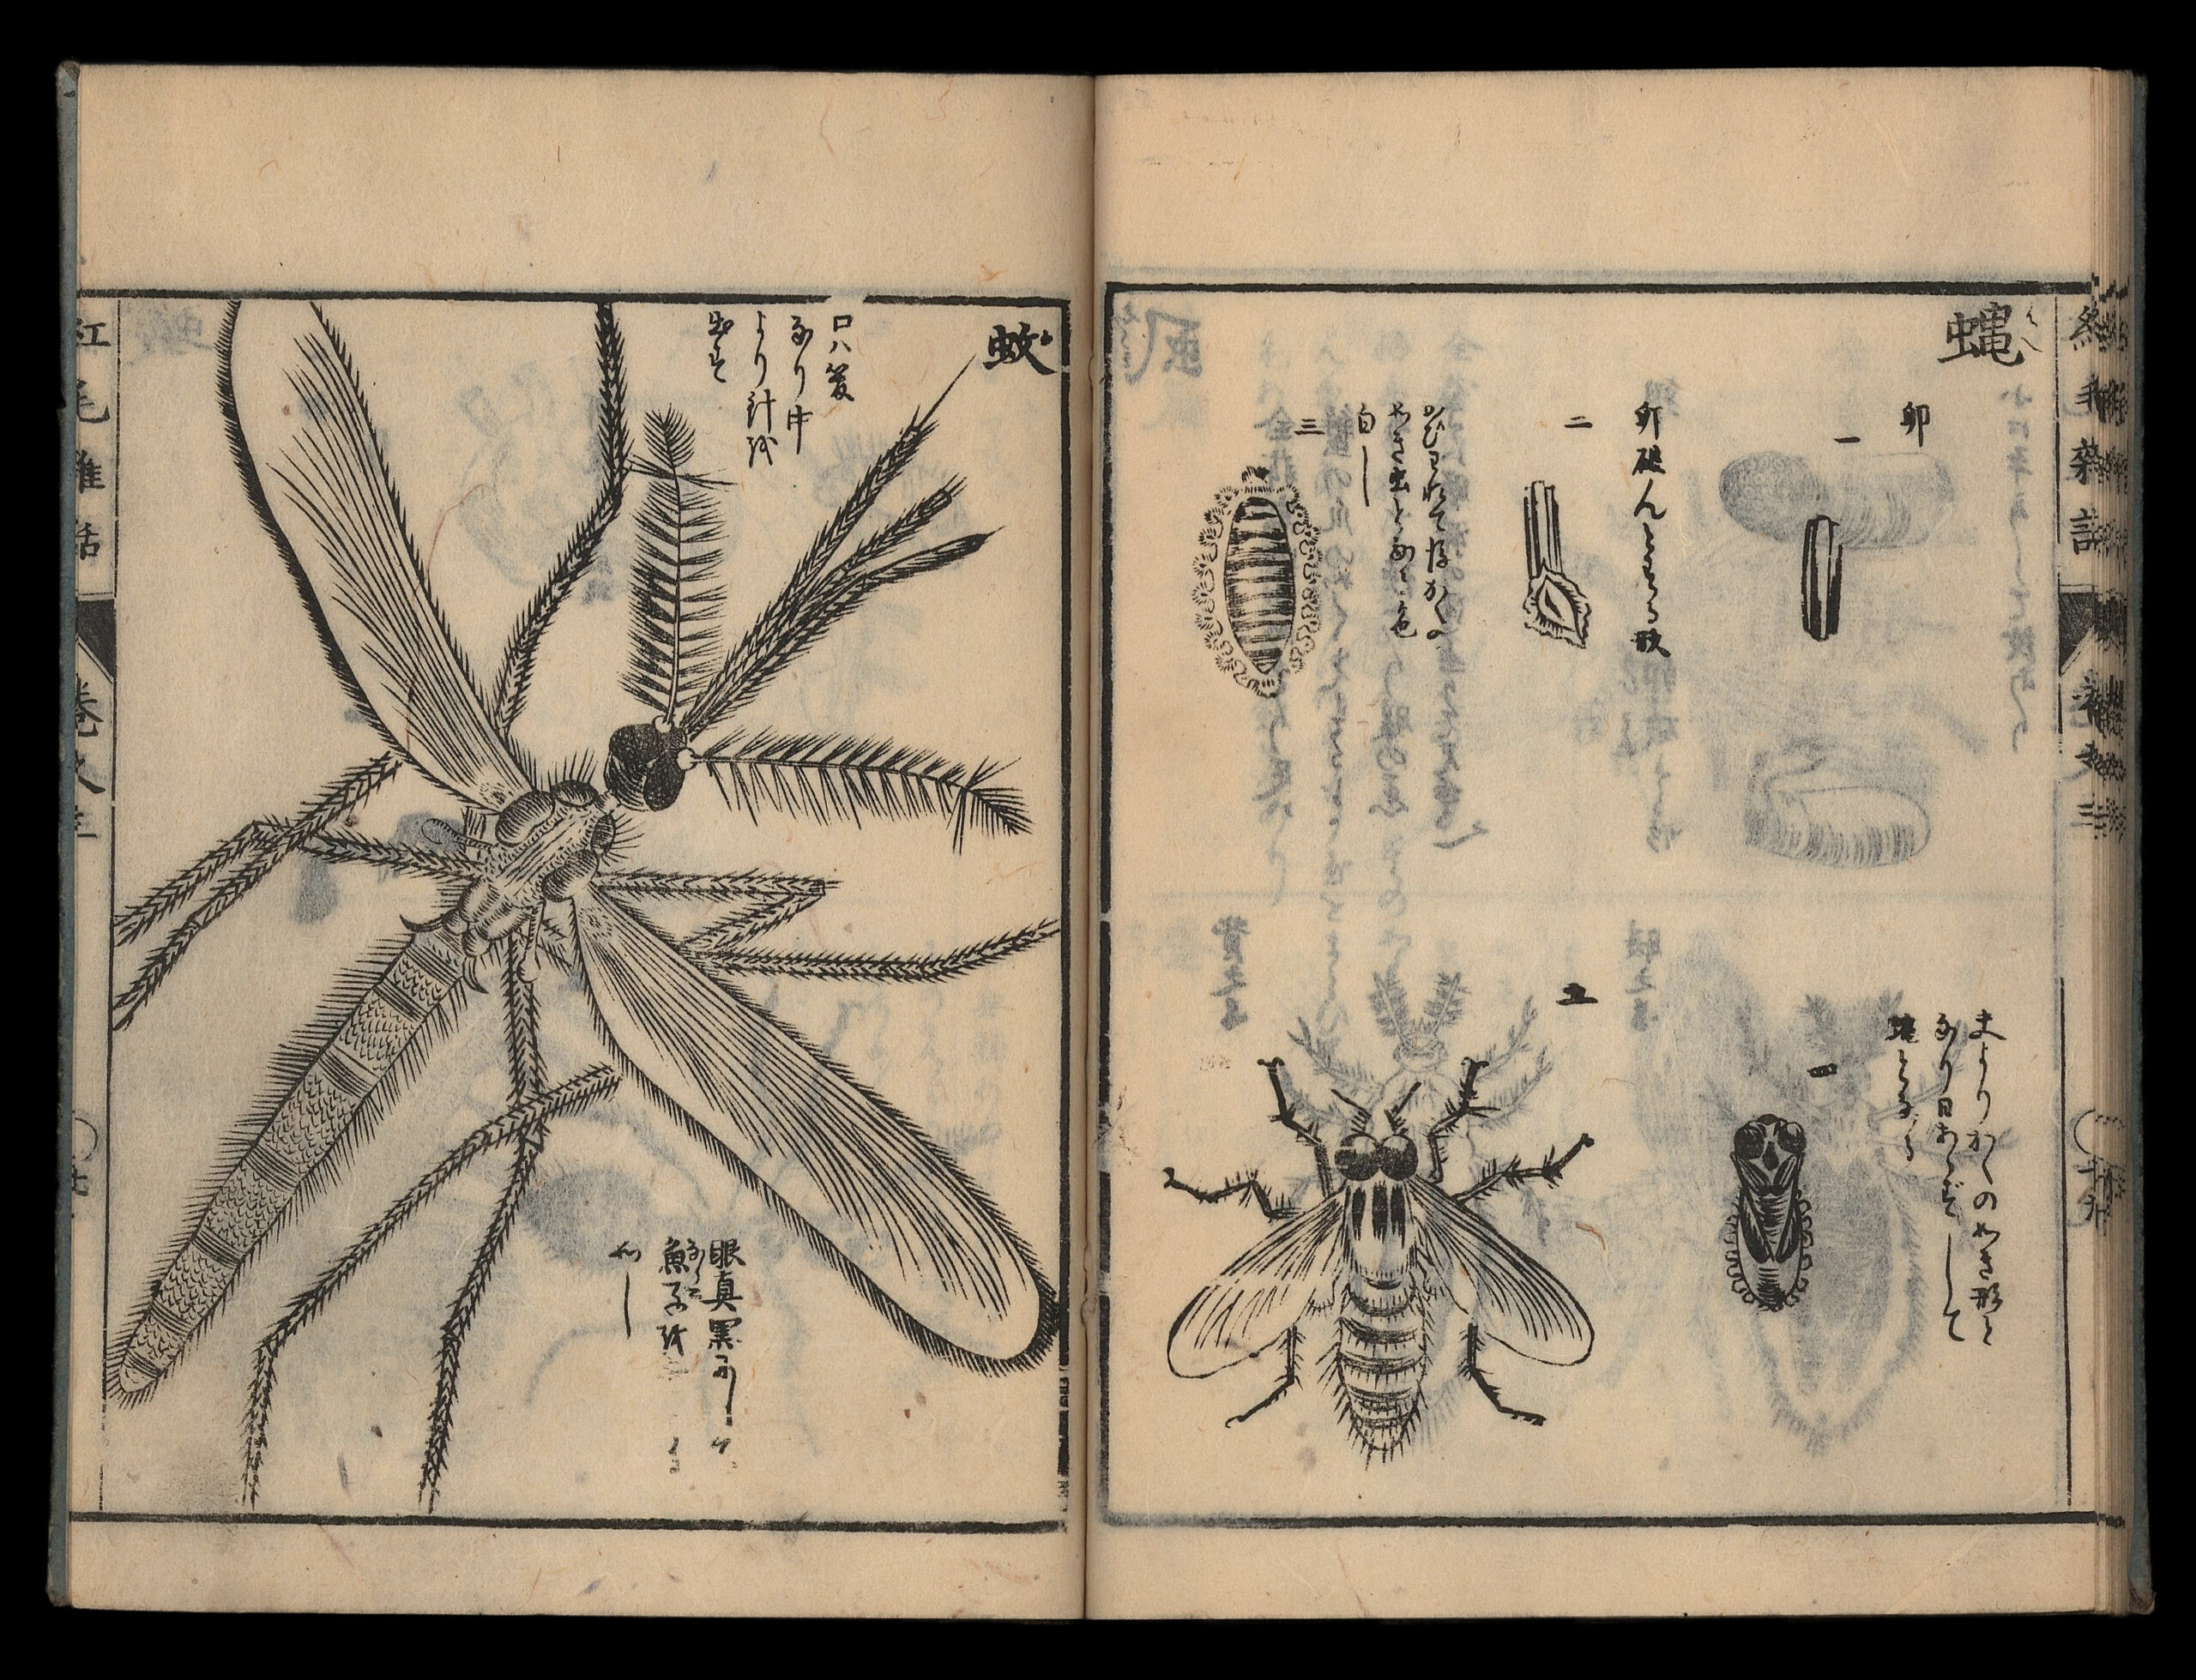 Shiba Kokan (1747-1818) (artist), Kitao Masayoshi (1764-1824) (artist) and Morishima Churyo (1754-1810) (author and editor), ‘A Miscellany on the Red-Hairs’ (Komo zatsuwa), woodblock-printed book, 5 volumes (complete), 1787, each volume: 22 x 15.8 cm.